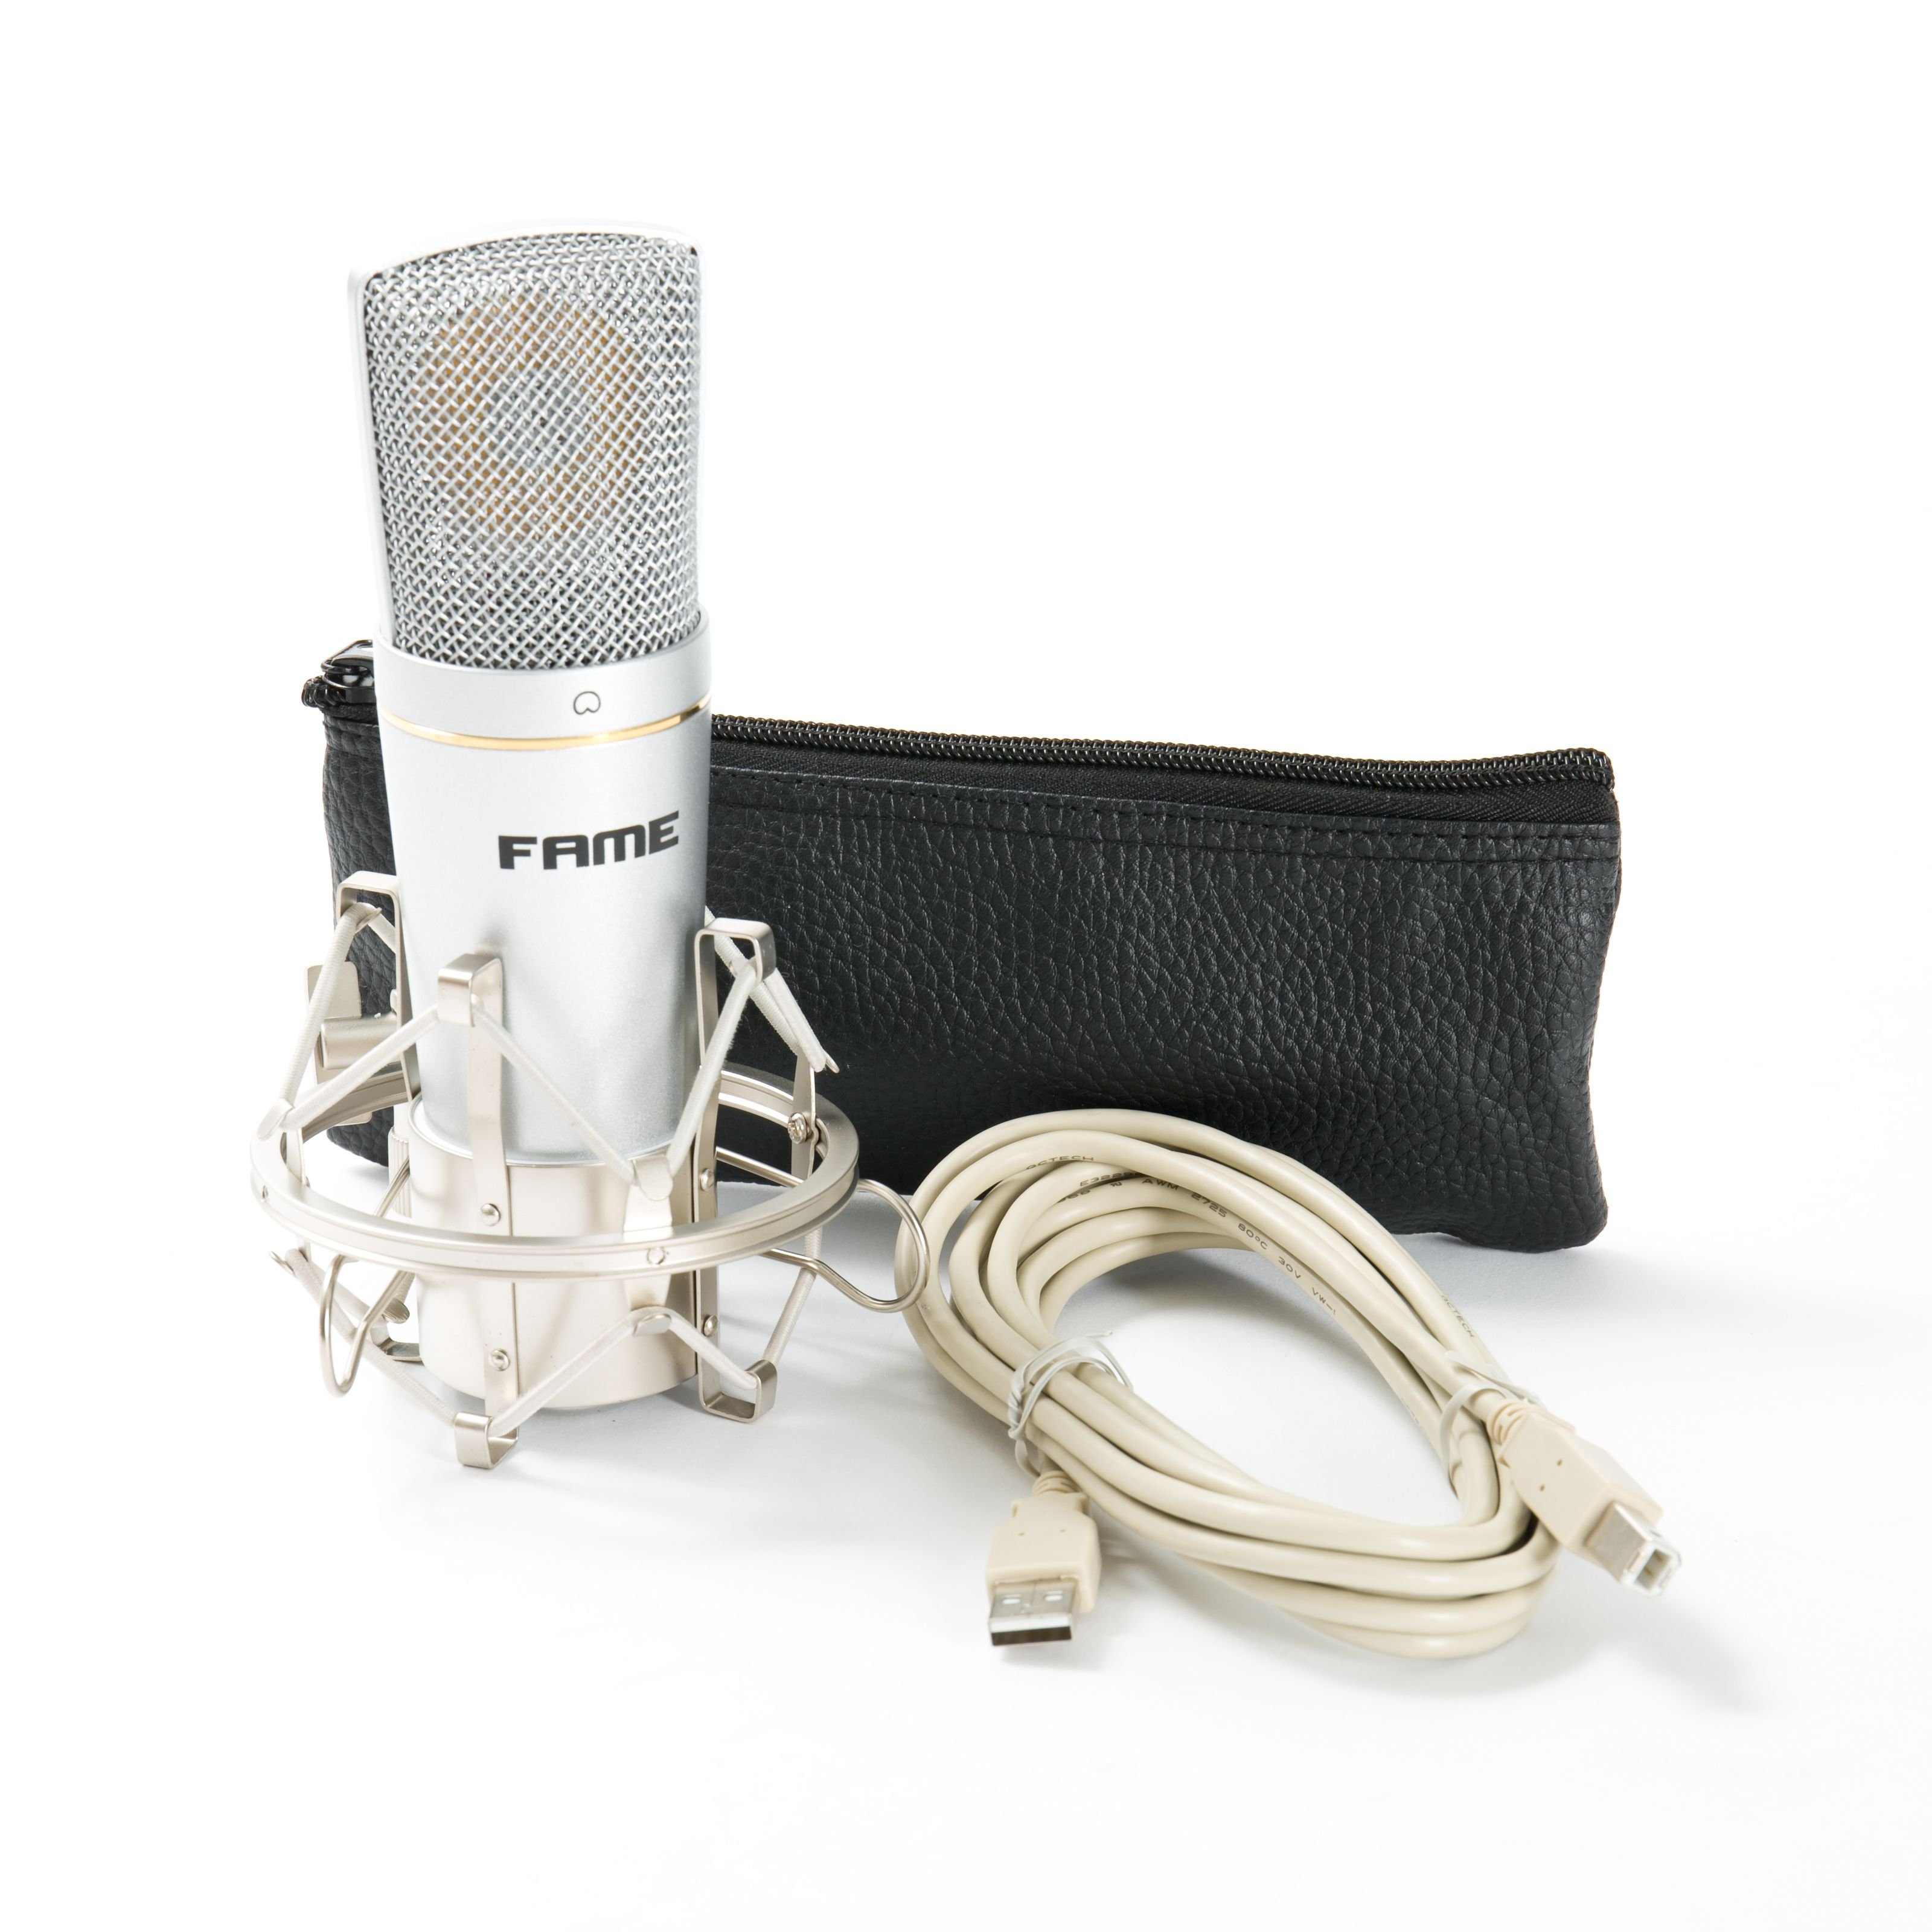 Fame Audio Mikrofon (Studio CU1), Studio CU1, USB Kondensatormikrofon, professionelles Aufnahmemikrofo